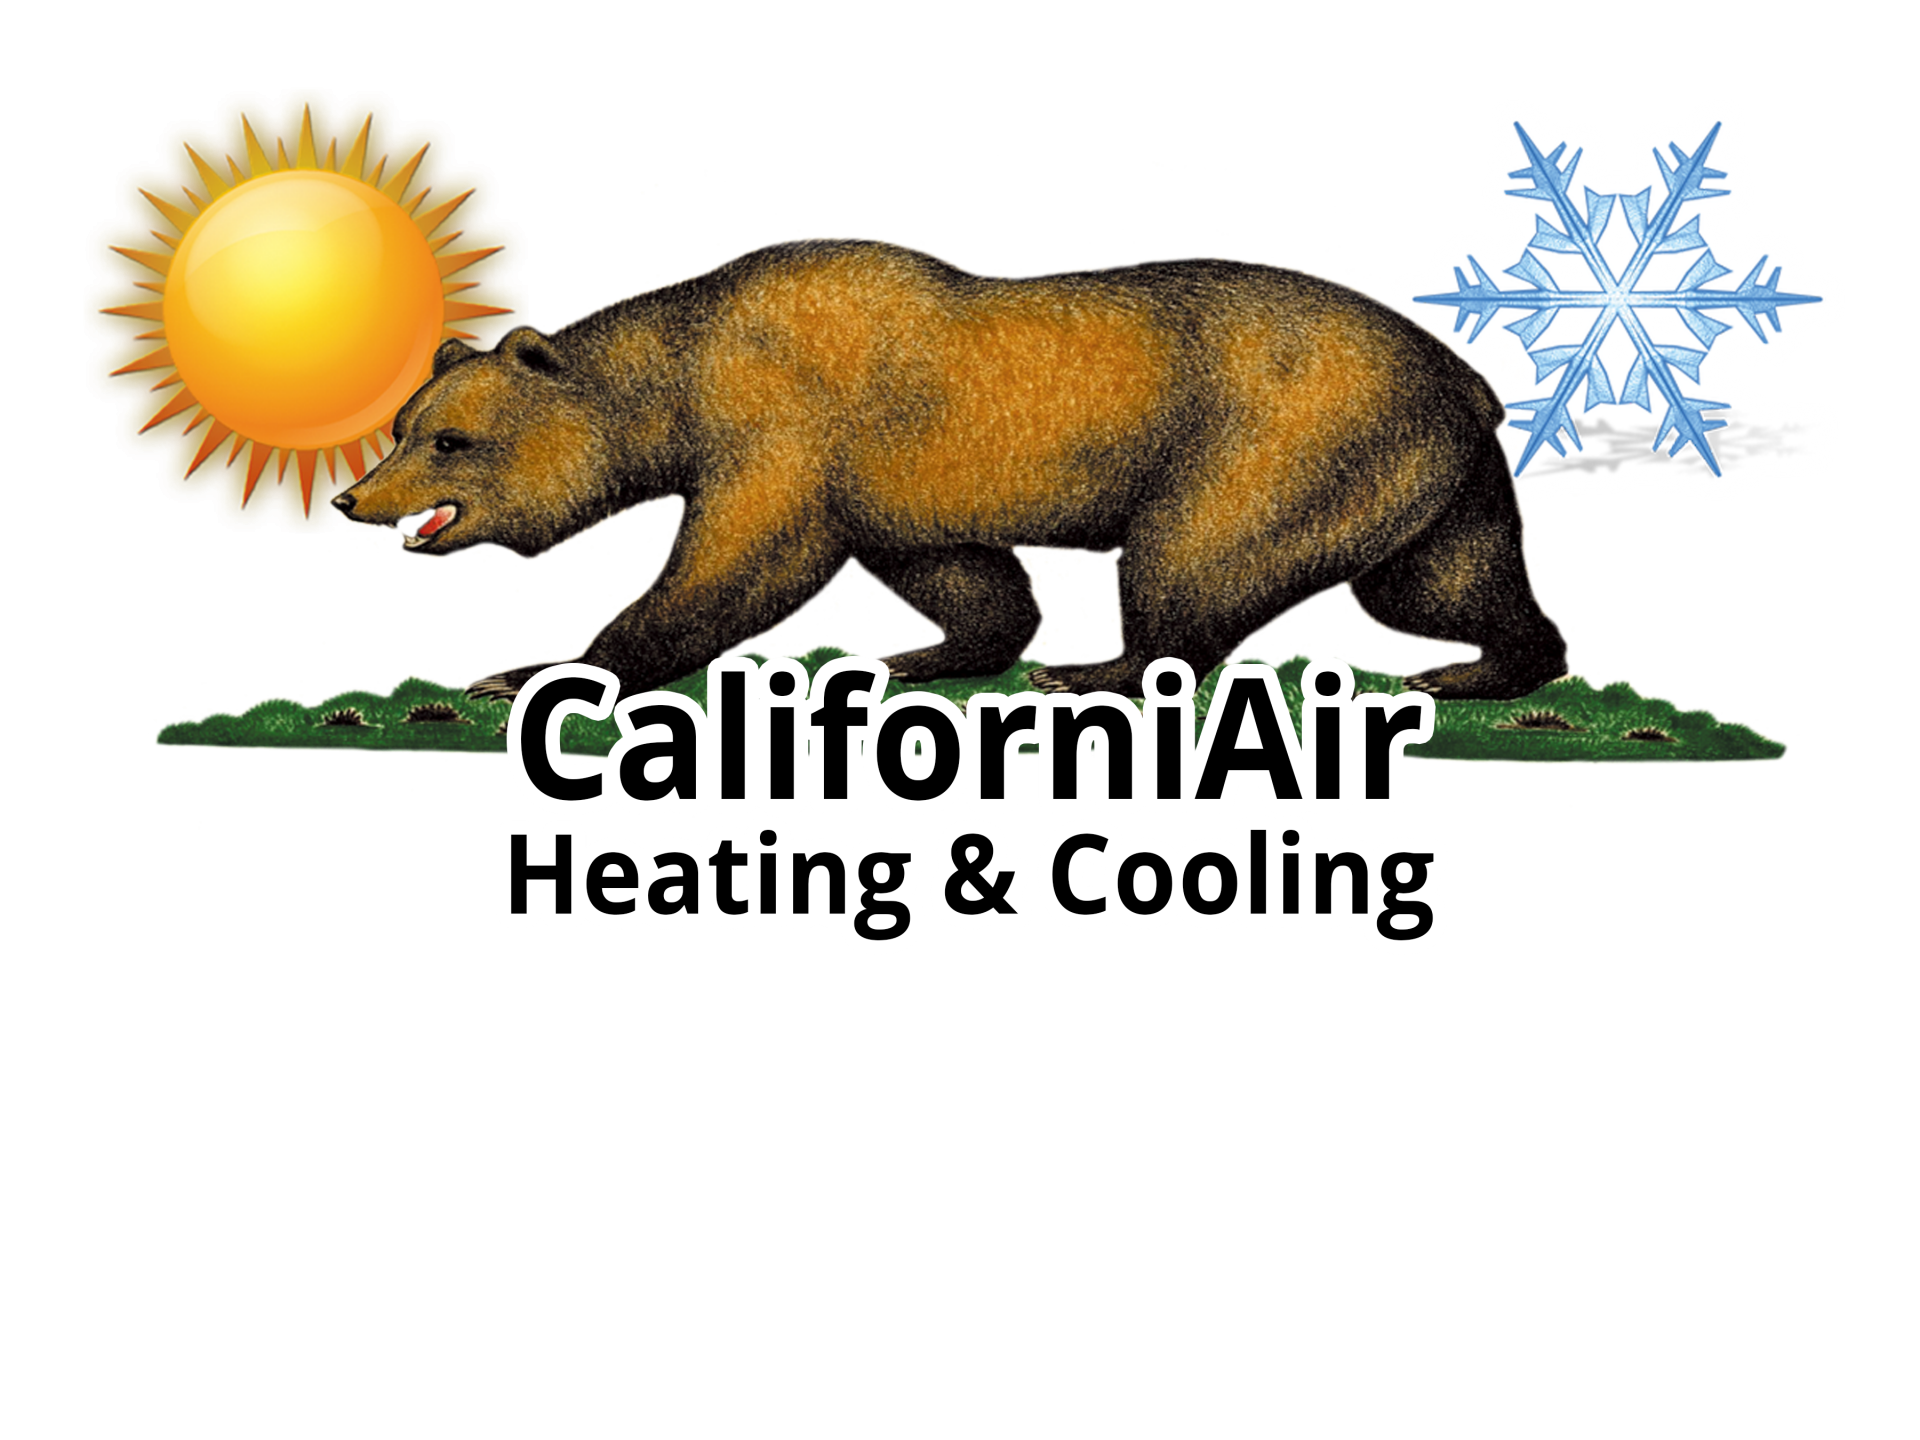 Californiair Heating and Air Conditioning logo